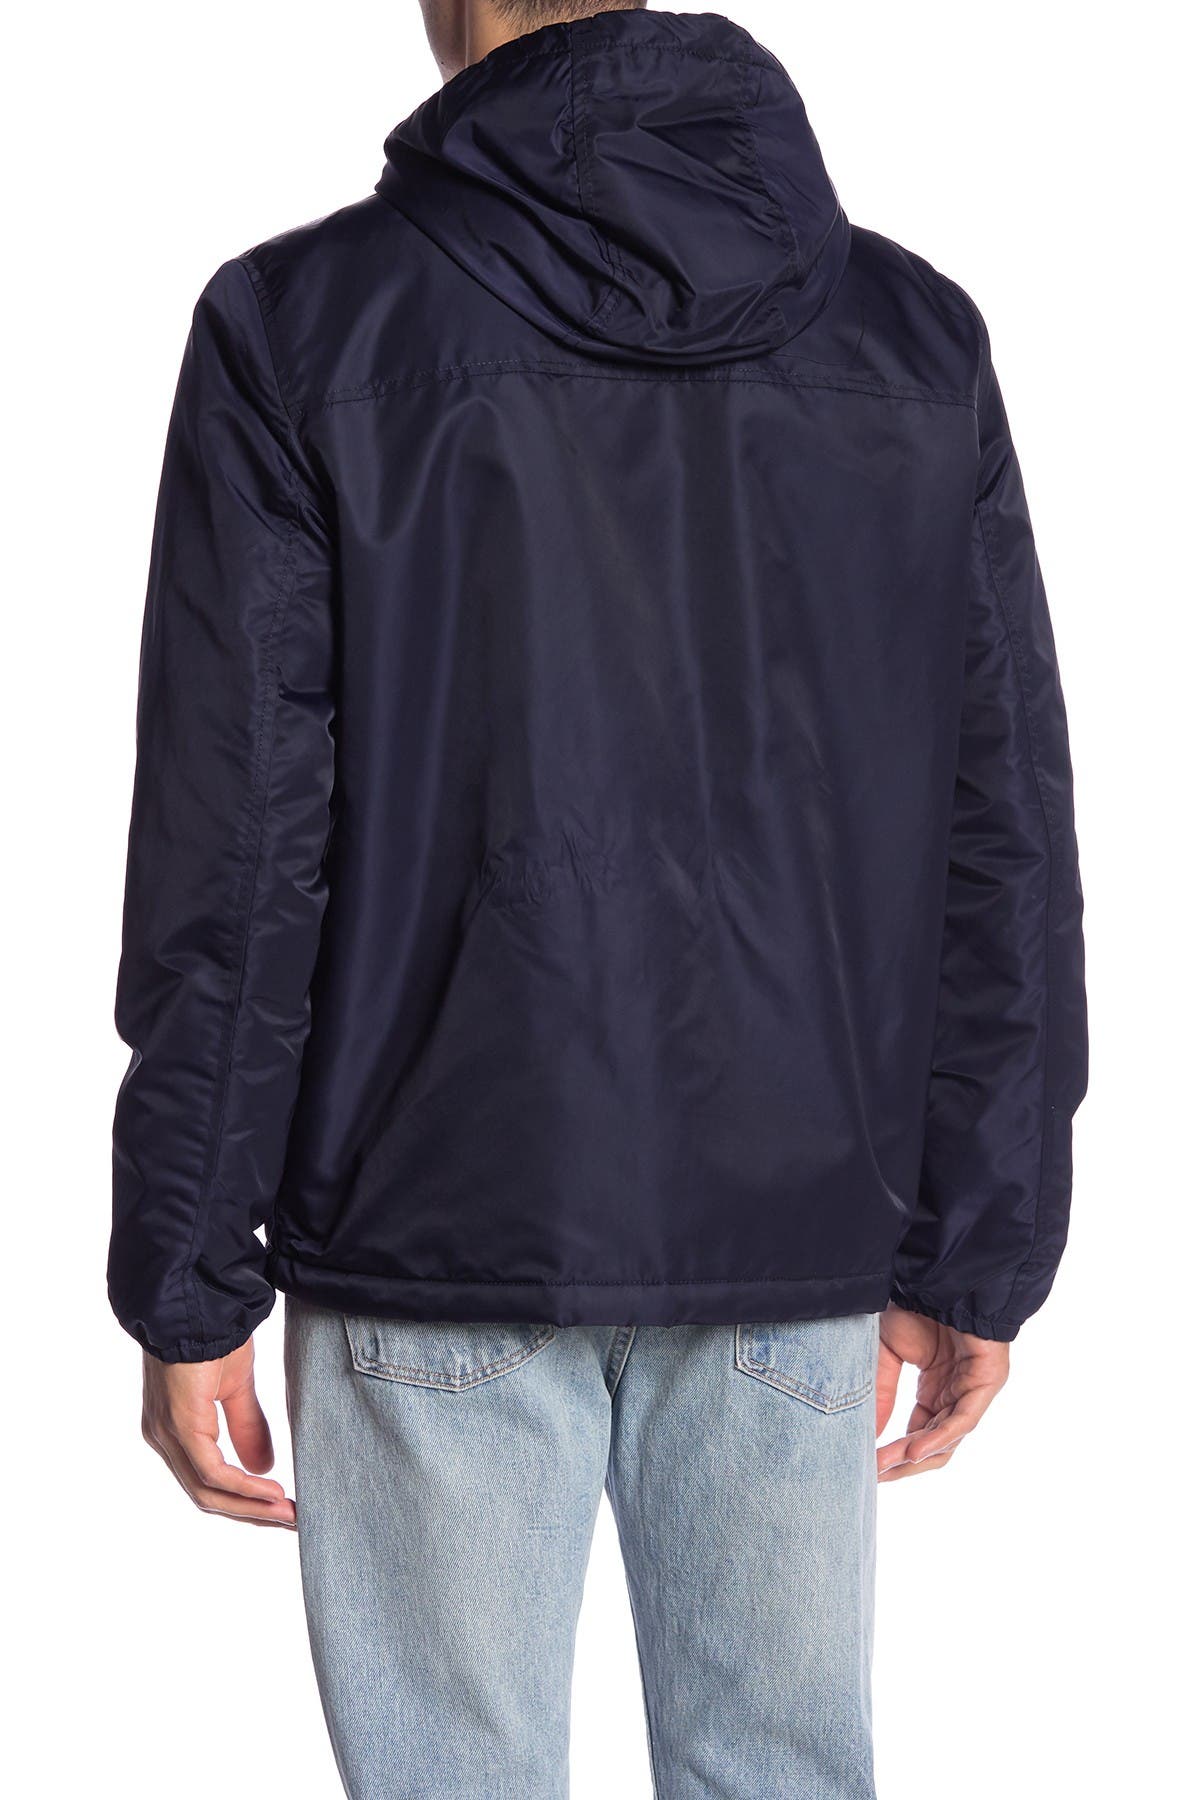 Levi's | Faux Fur Lined Water Resistant Hooded Jacket | Nordstrom Rack